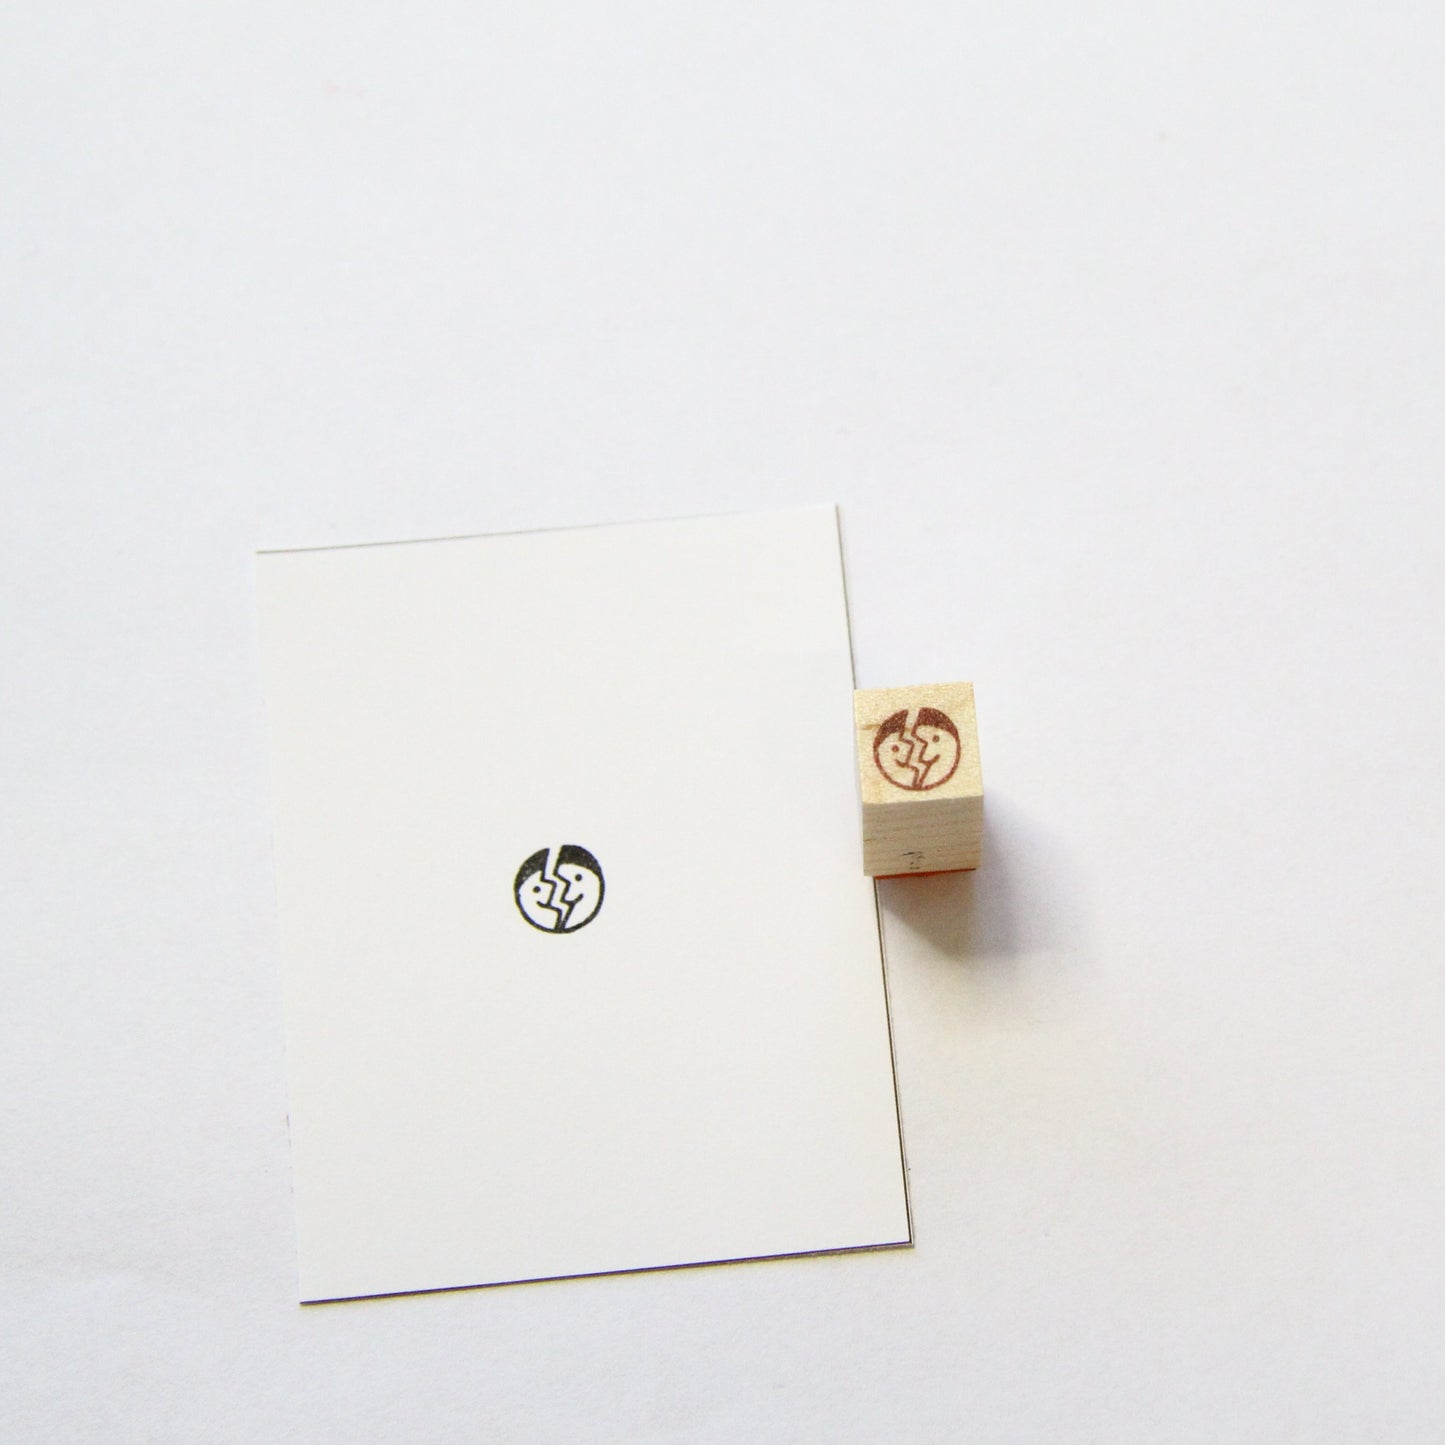 Littlelu Mini Rubber Stamps (1x1cm)_New